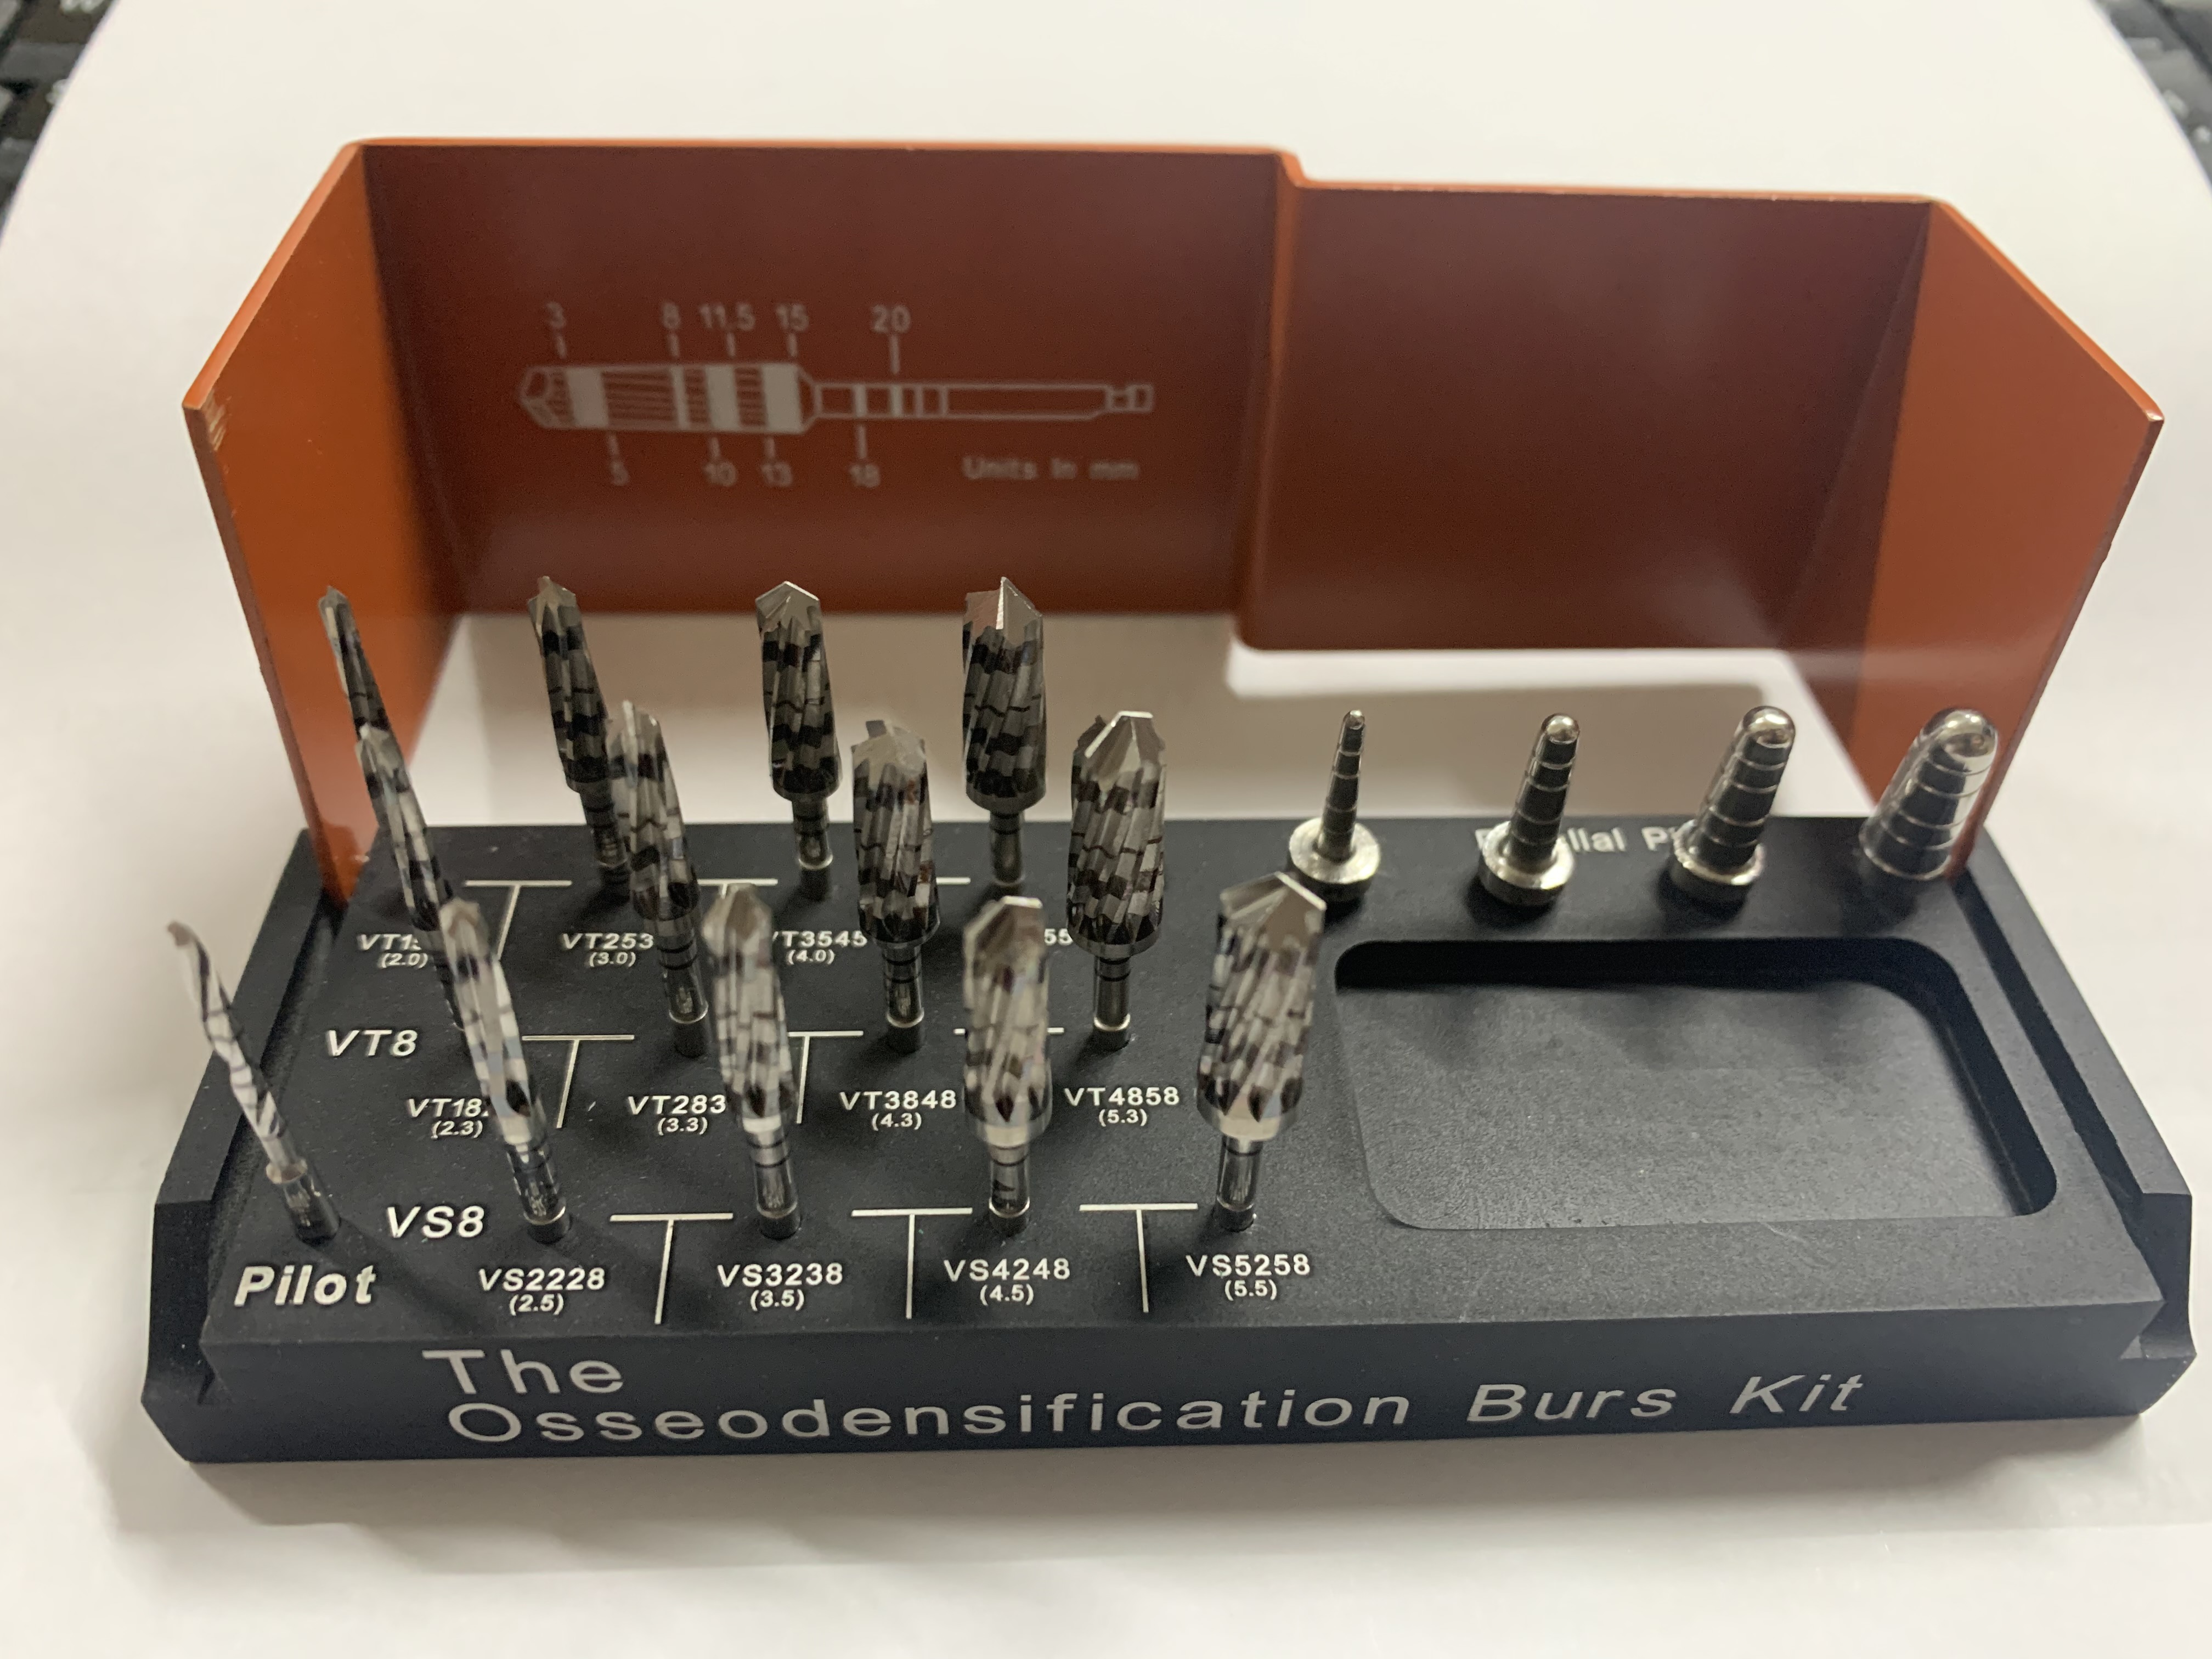 Dental implant drill burs kit